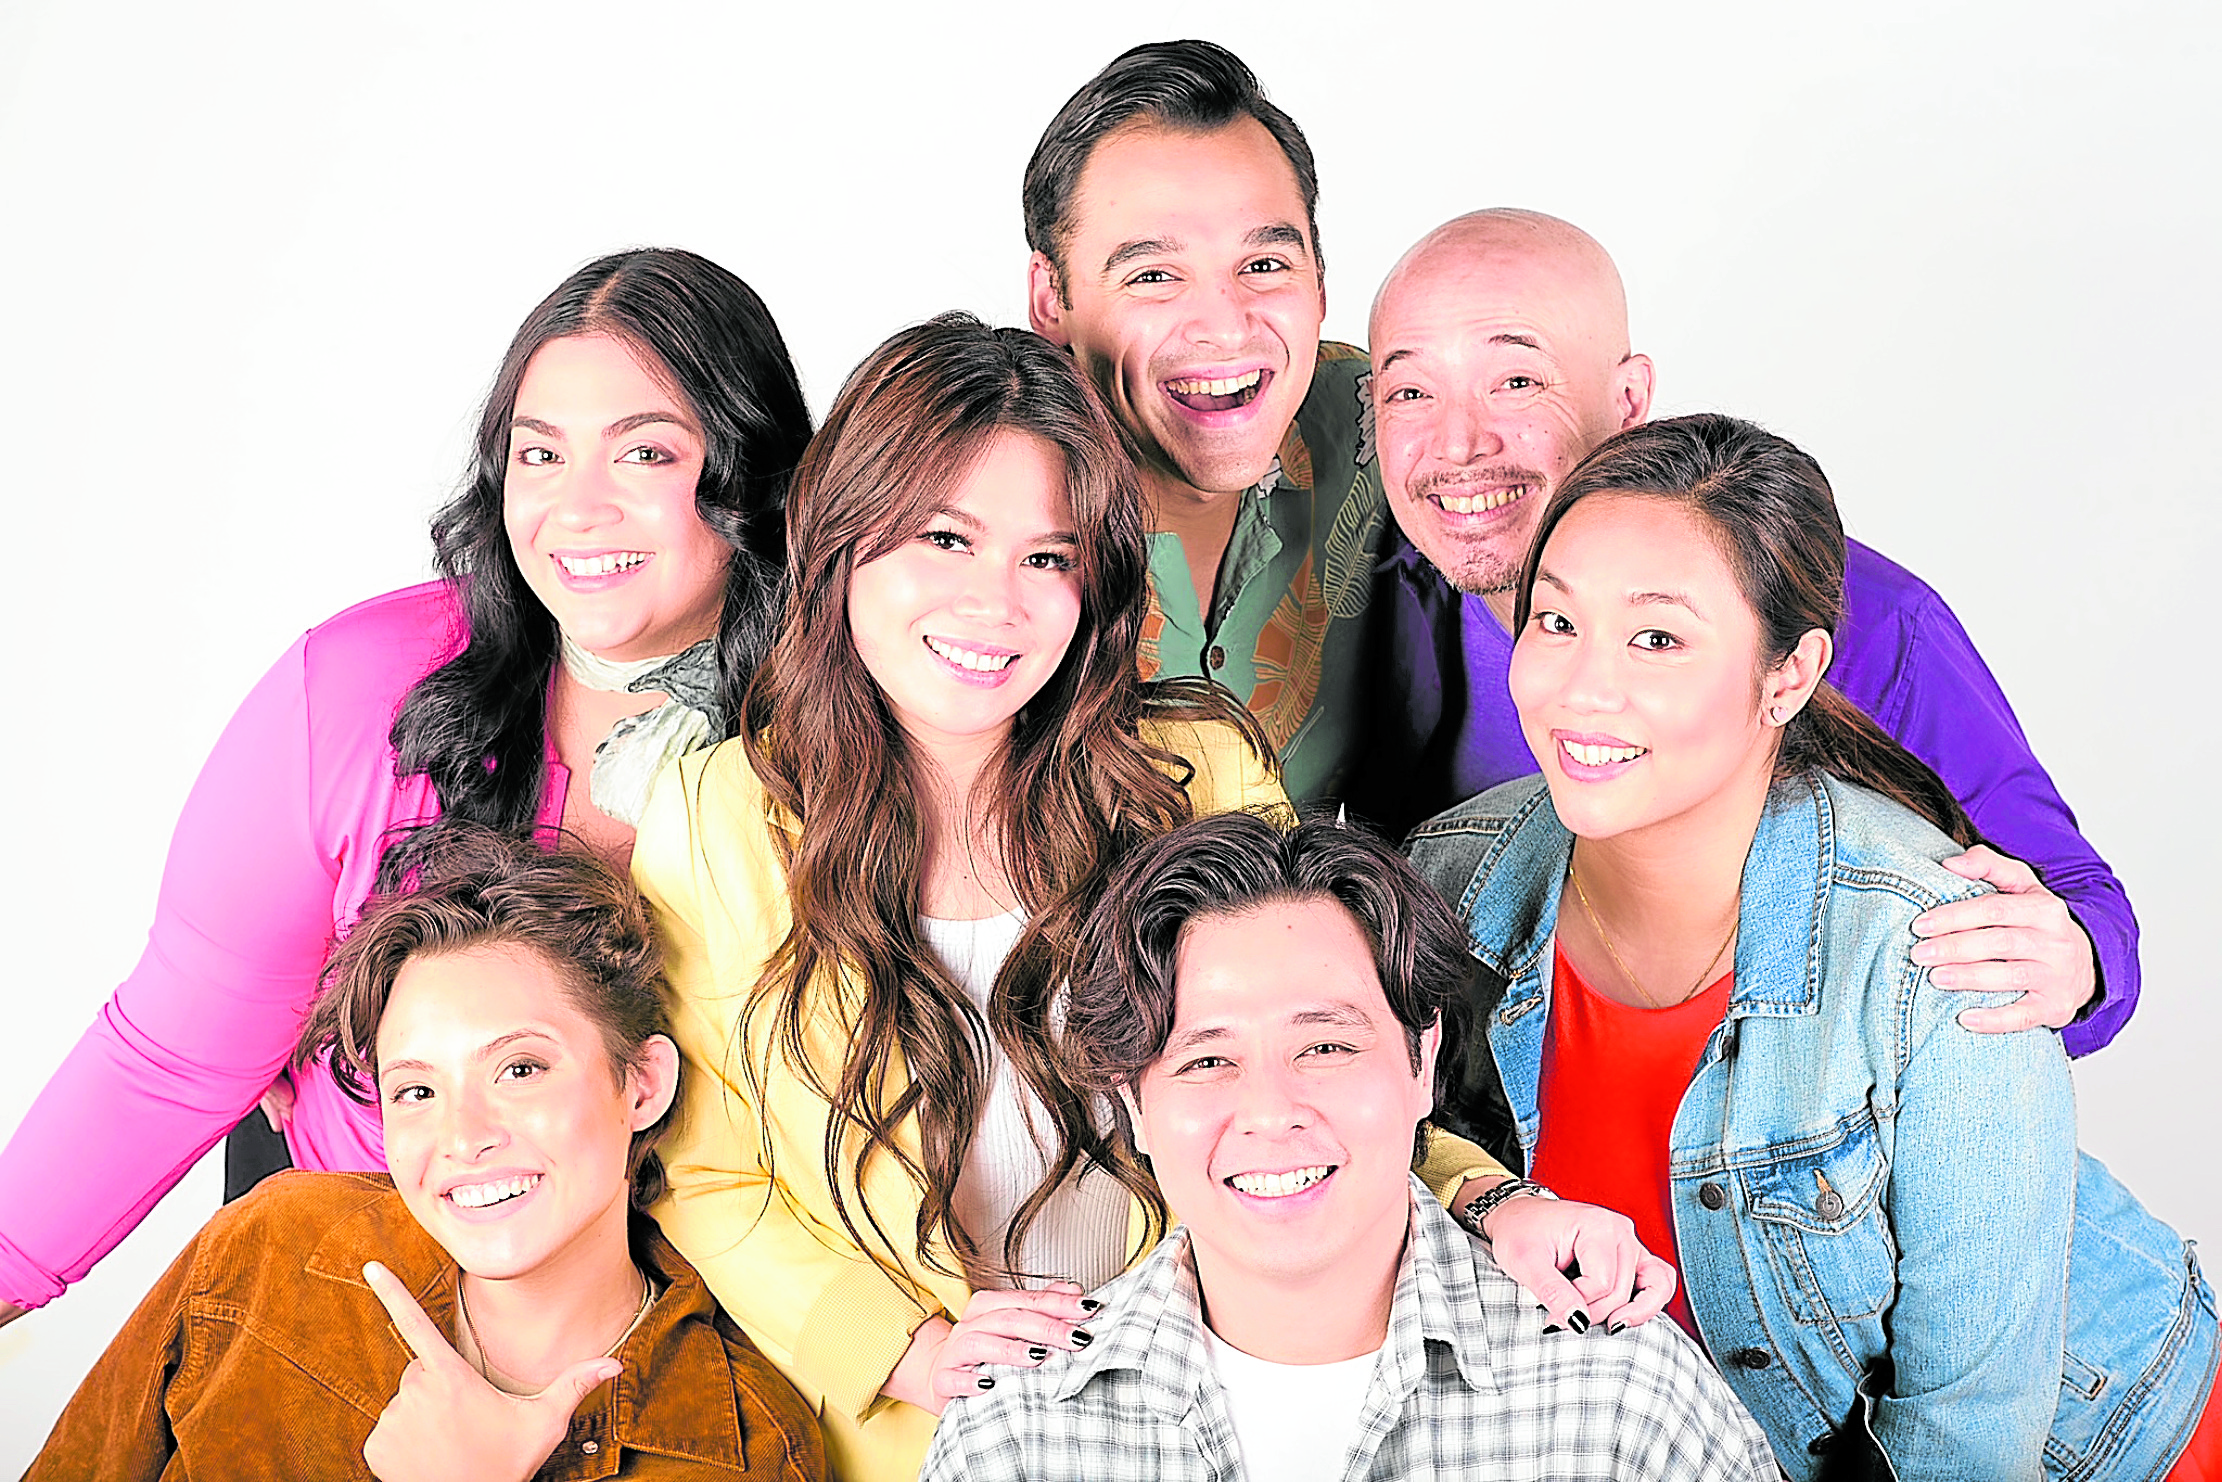 Cast of “Breakups & Breakdowns” (clockwise, from top left): Sarah Facuri, TanyaManalang, Nelsito Gomez, Joel Trinidad, NIcky Triviño, Reb Atadero and Rachel
Coates